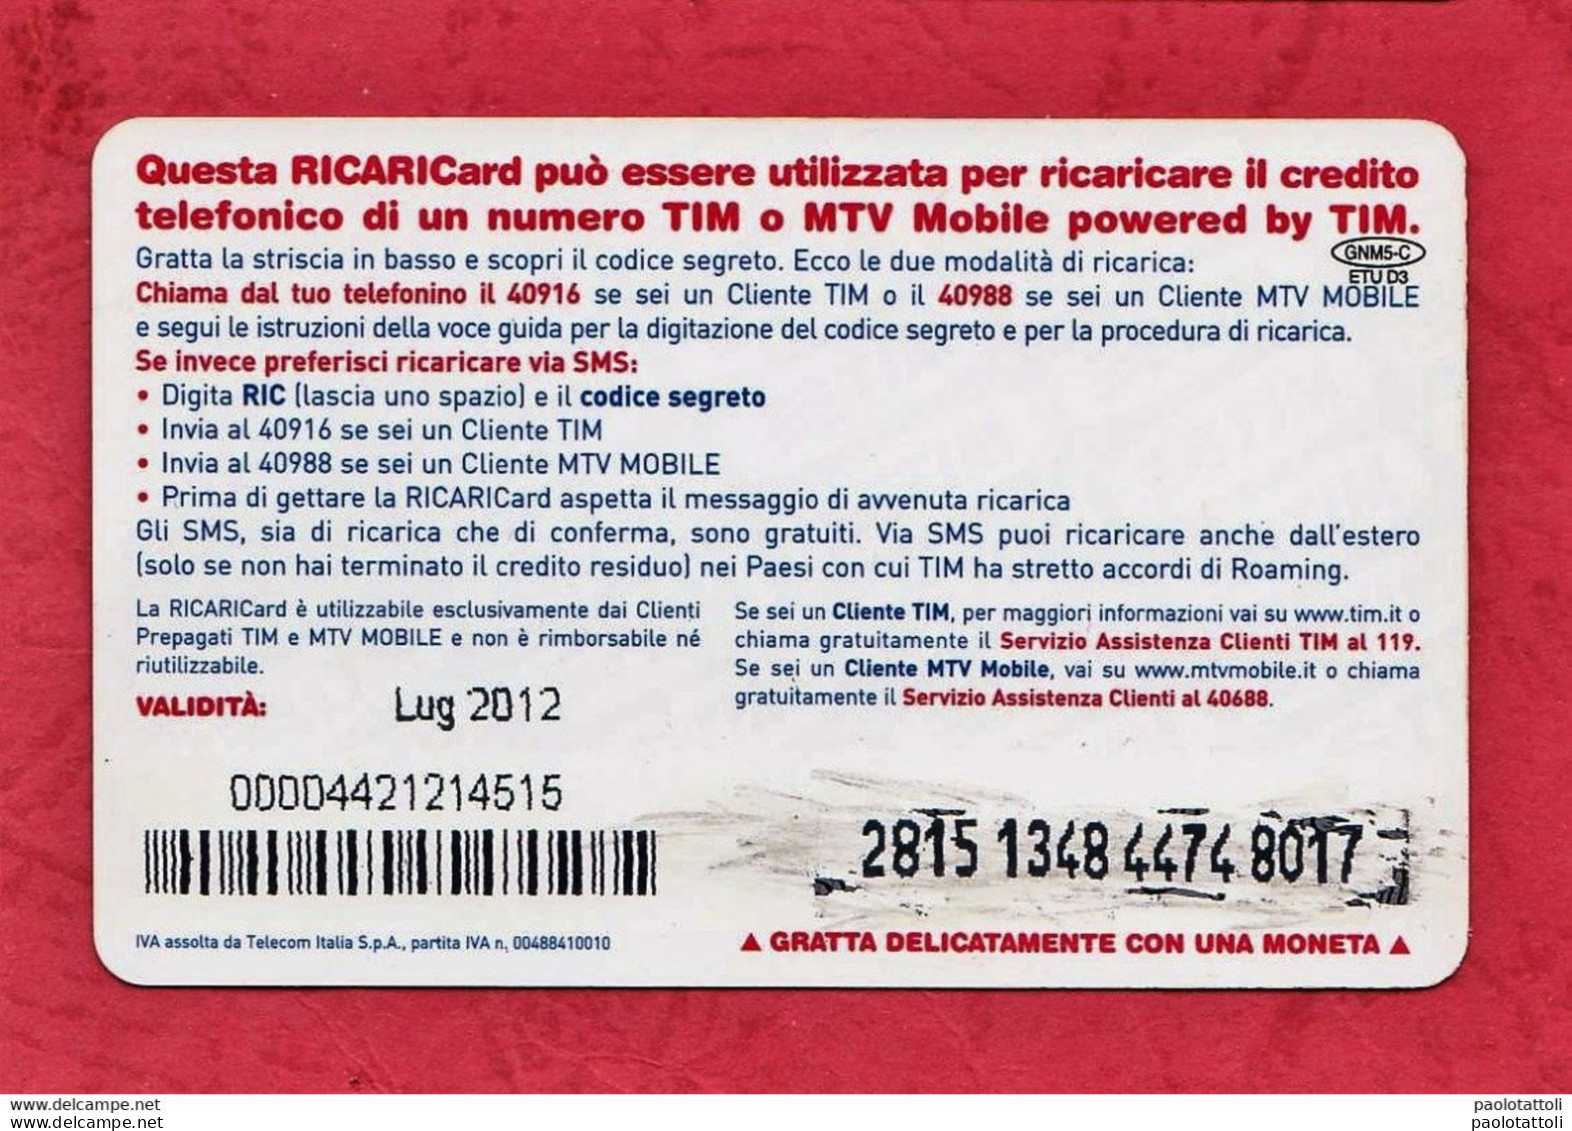 Italia Rep.- Used Top Up Phone Card, Ricarica Tim Usata, 5 Euro- Vivi La Nazionale Con TIM- Scad.lug.2012 - [2] Tarjetas Móviles, Prepagadas & Recargos